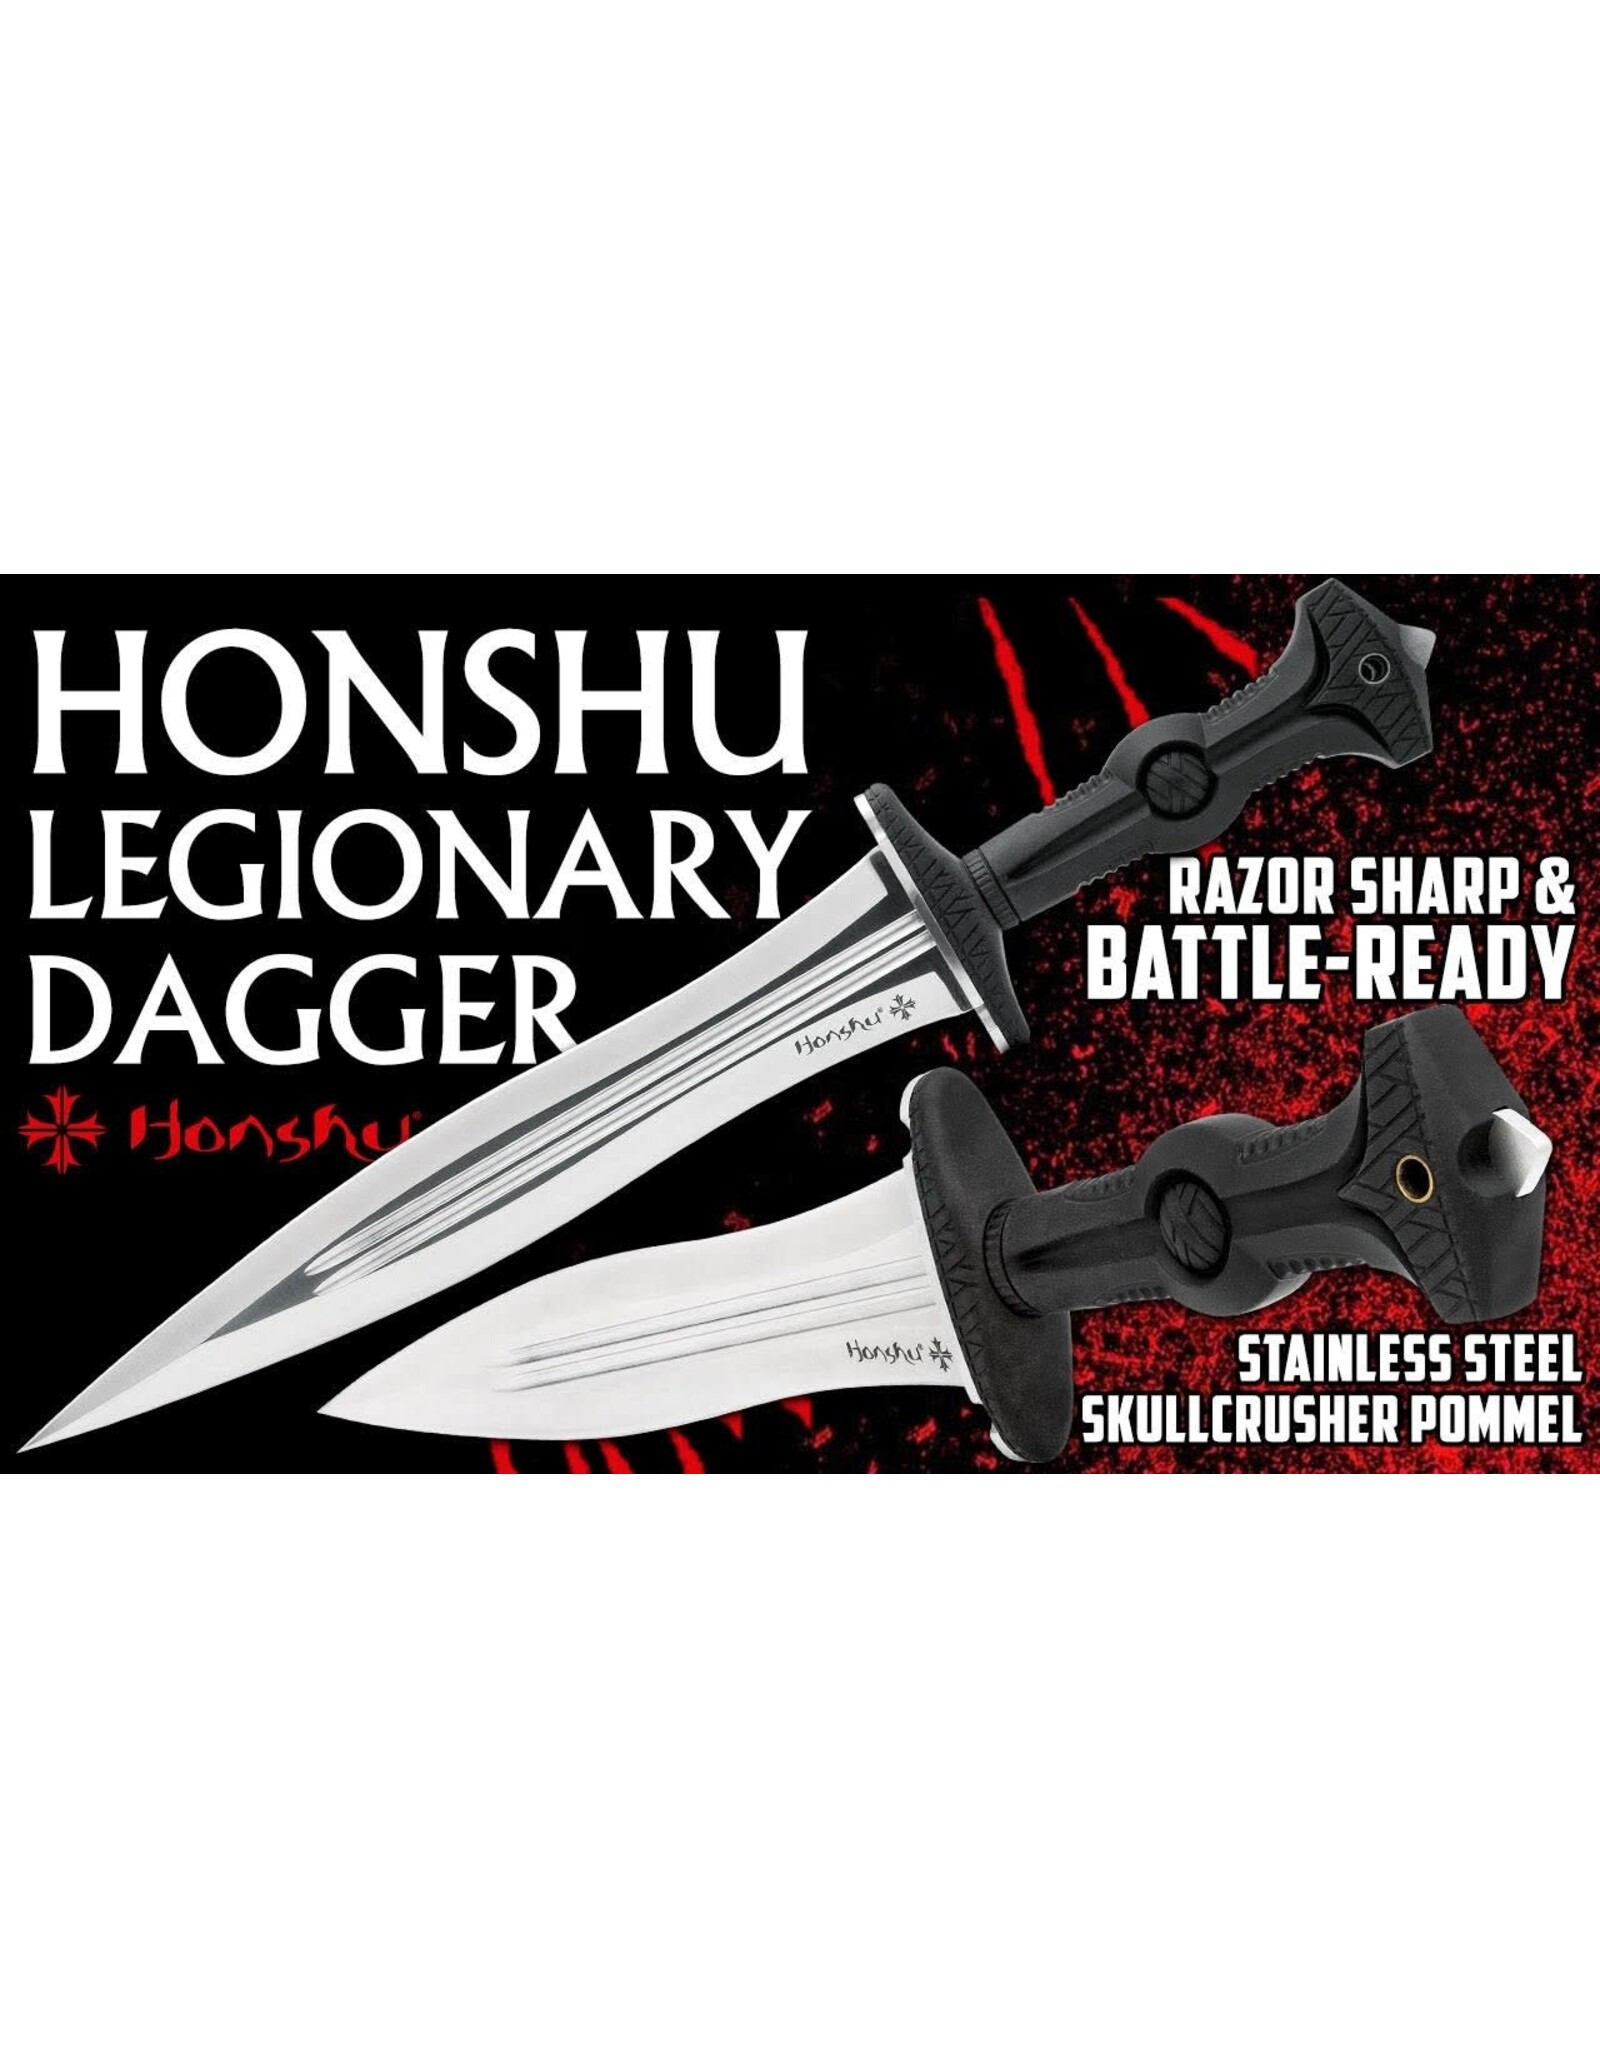 Honshu Honshu Legionary Dagger - 7Cr13 SS Blade, TPR Handle, Steel Guard - Length 19 5/8"